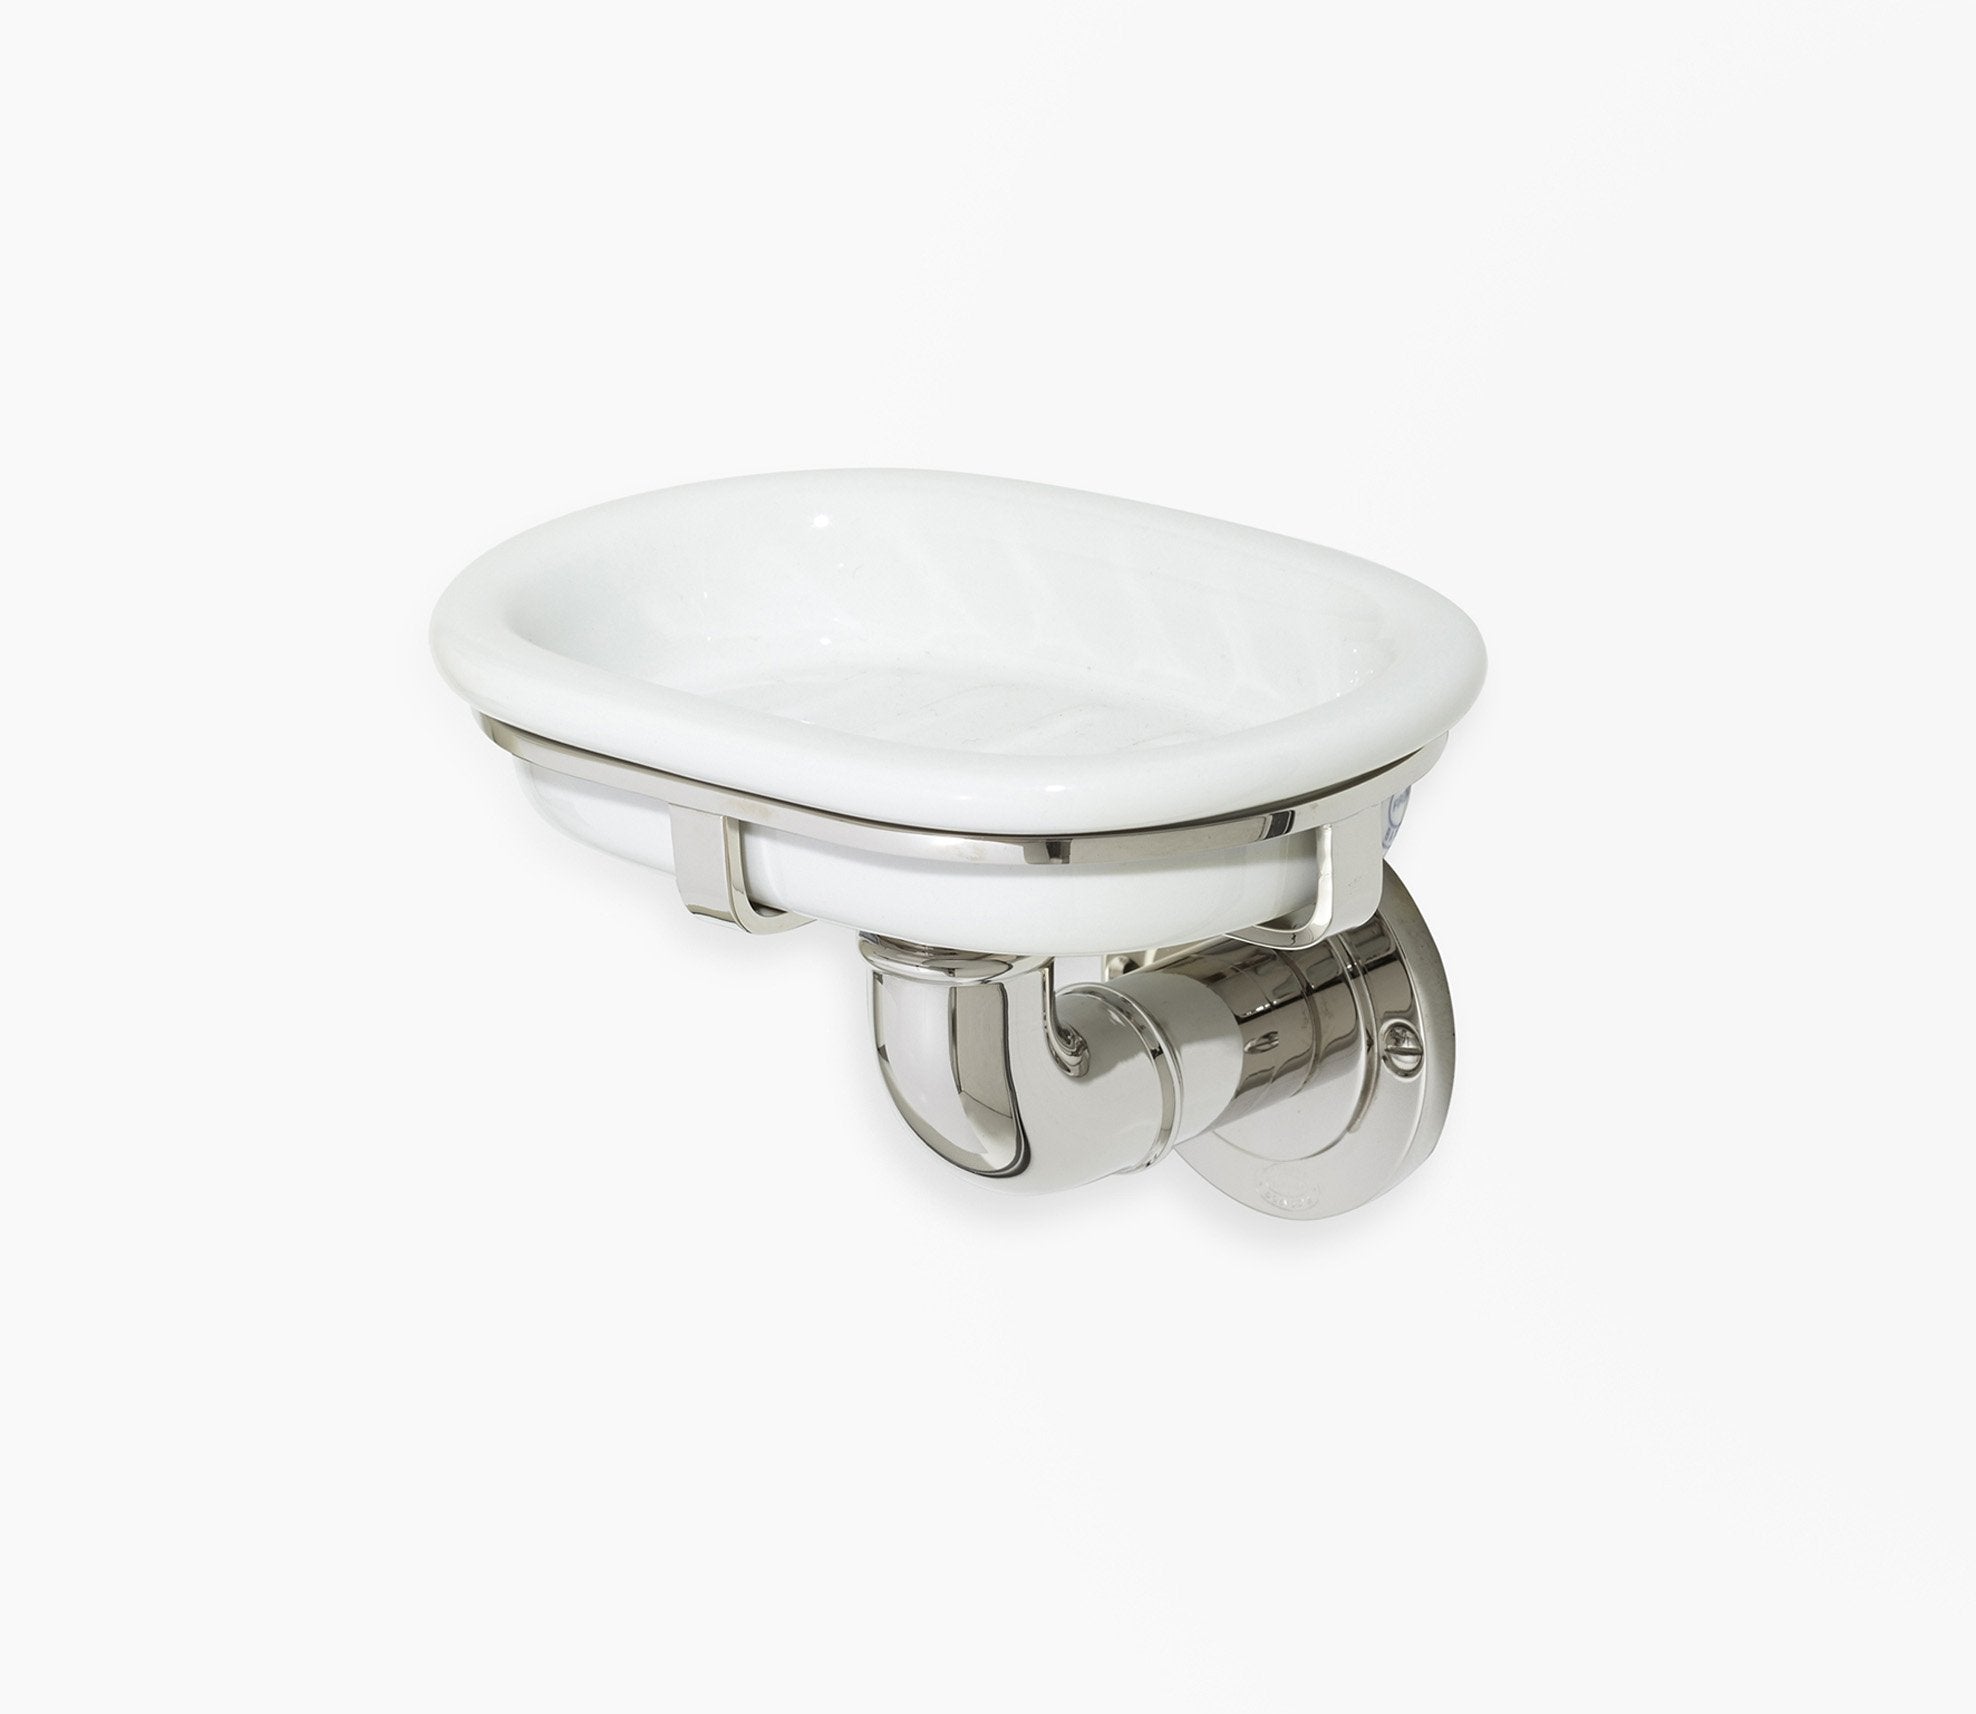 Moderna Wall Soap Dish Holder White Porcelain Product Image 1